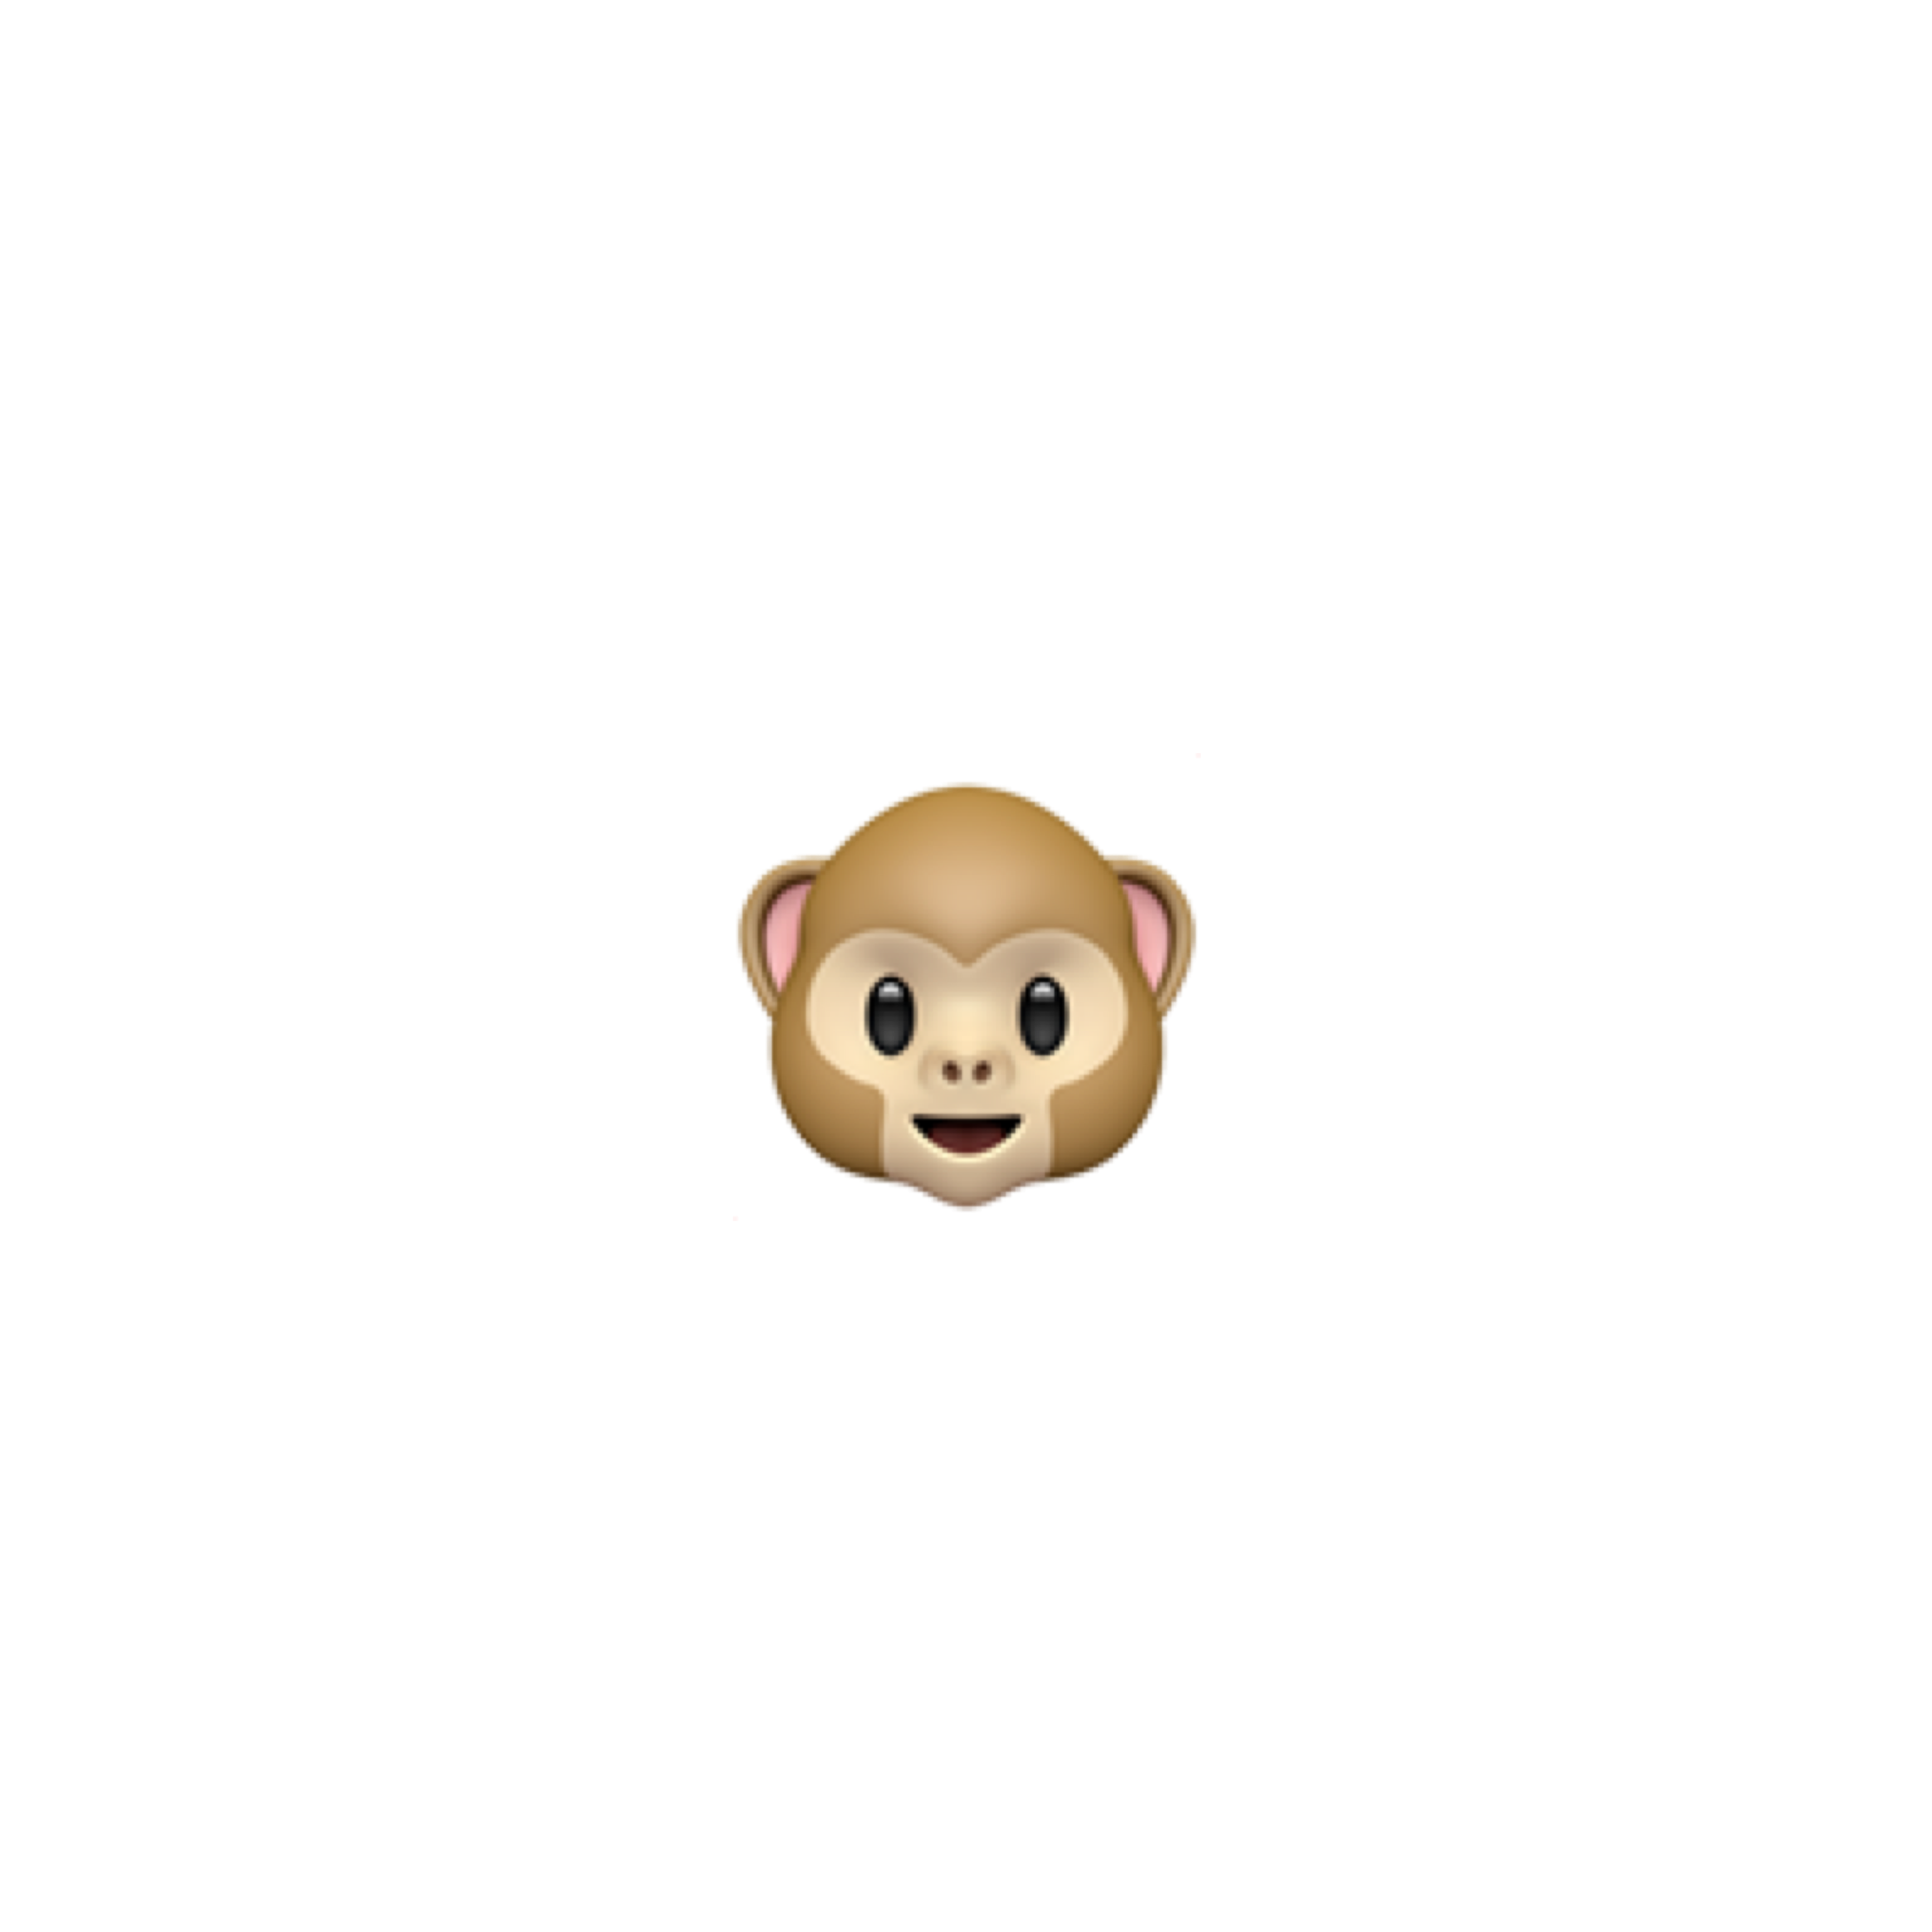 Monkey iphone remix. Обезьяна ЭМОДЖИ айфон. Смайлик обезьянка. Смайлик обезьянка айфон. Анимоджи мартышка.